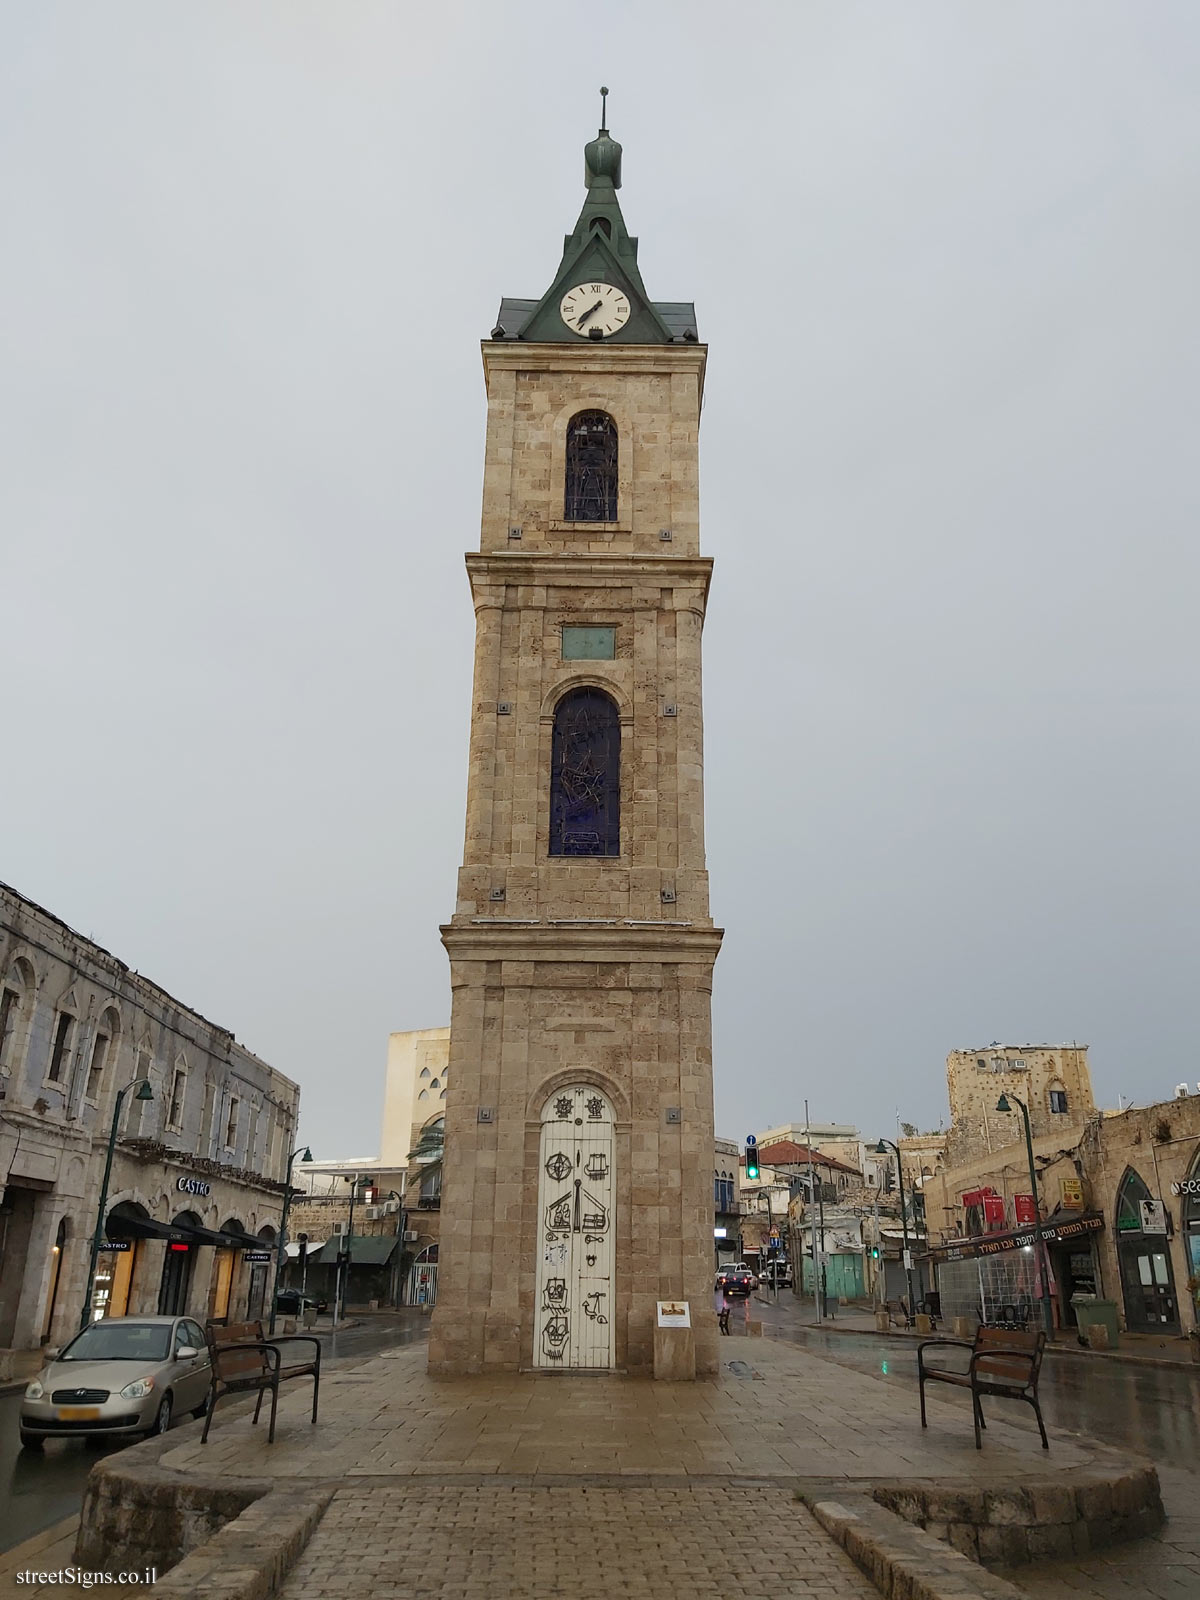 Tel Aviv - Jaffa - The Clock Tower